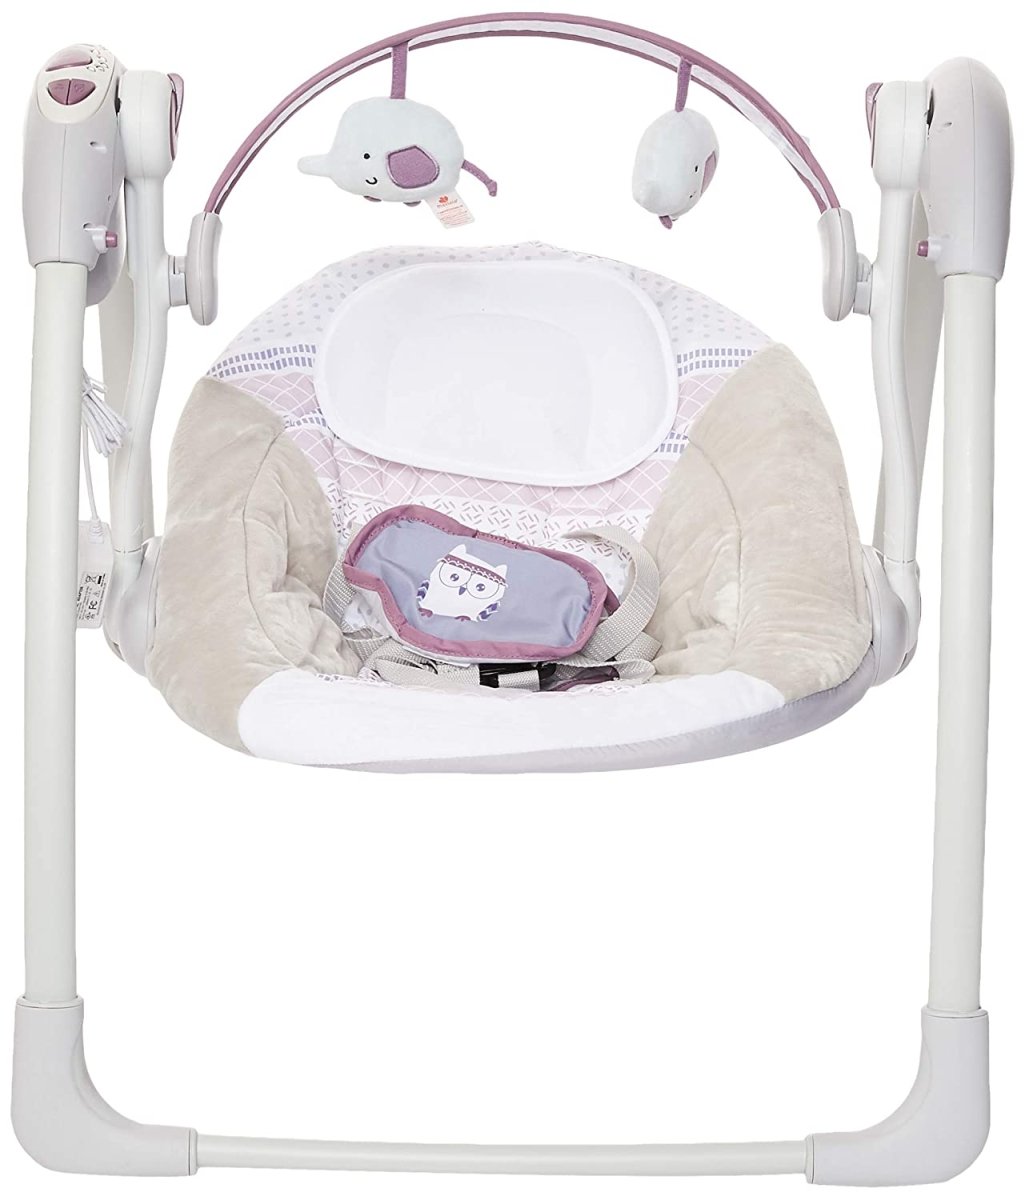 Mastela Deluxe Portable Baby Swing Toddler Swing- Multicolor - 6505